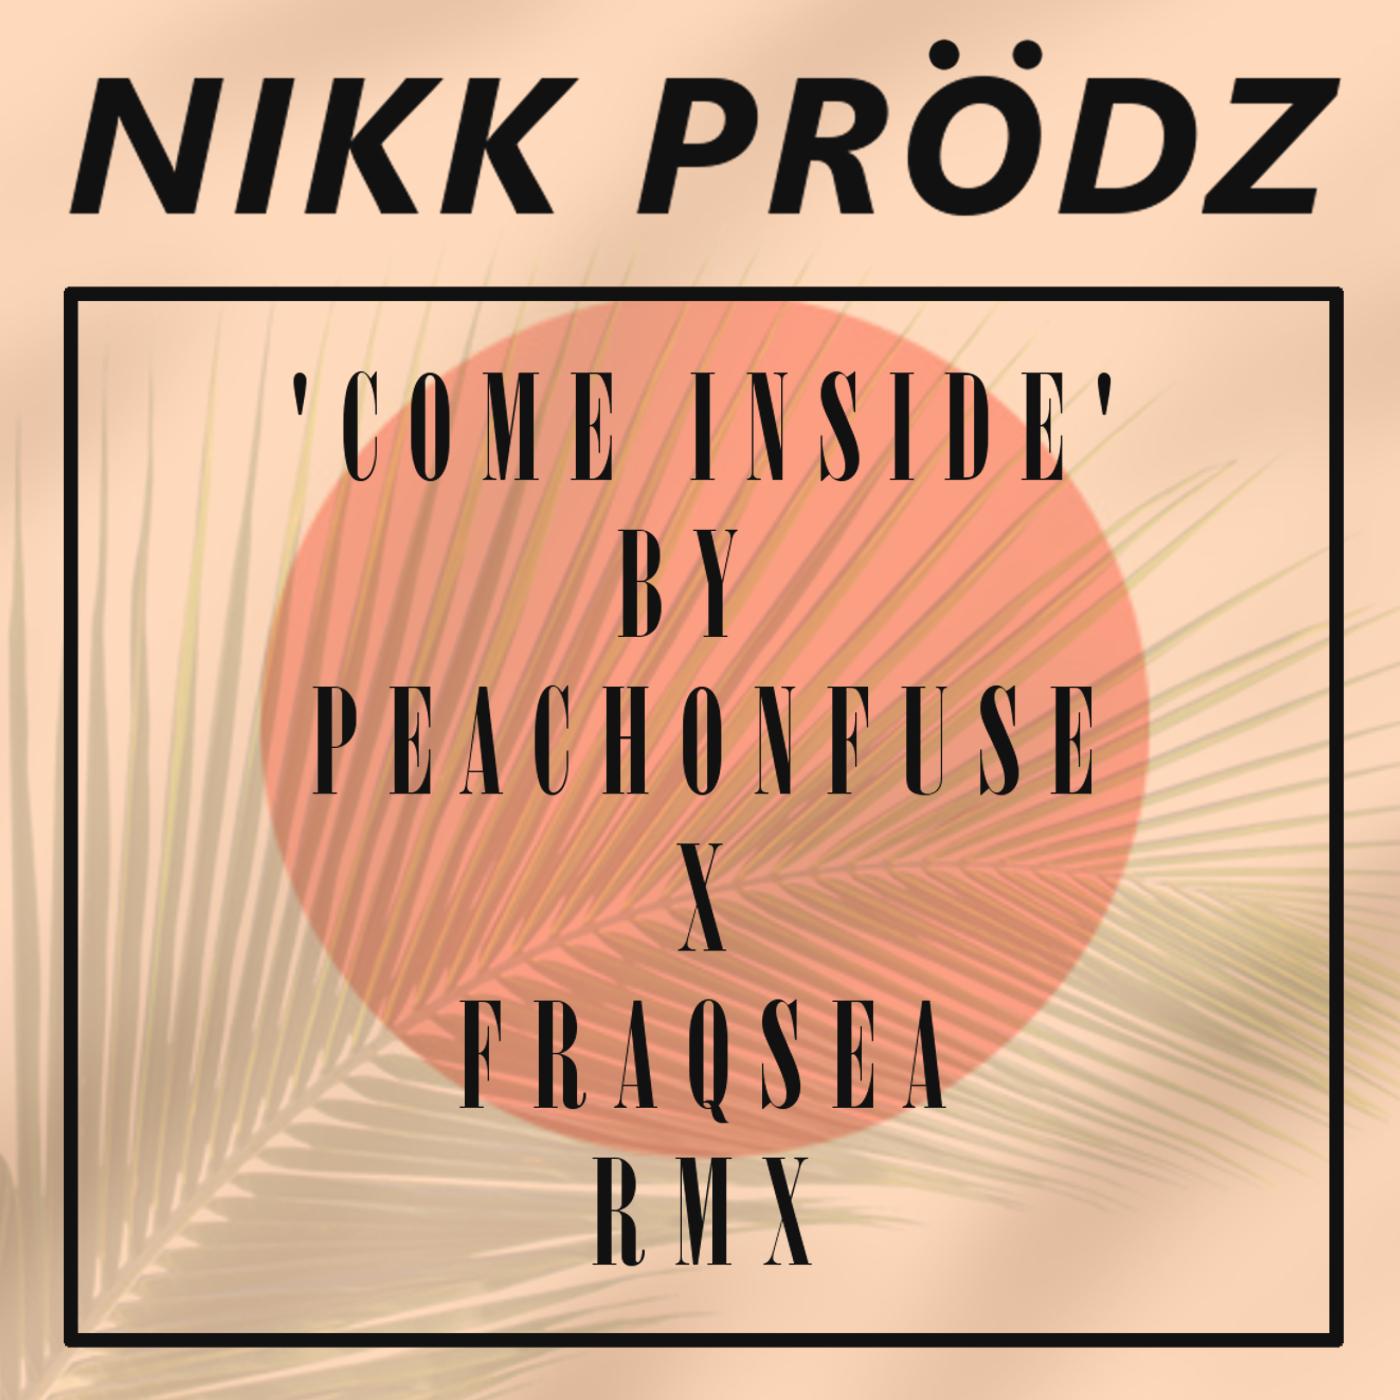 Peachonfuse - Come Inside (Nikk Prodz Remix)